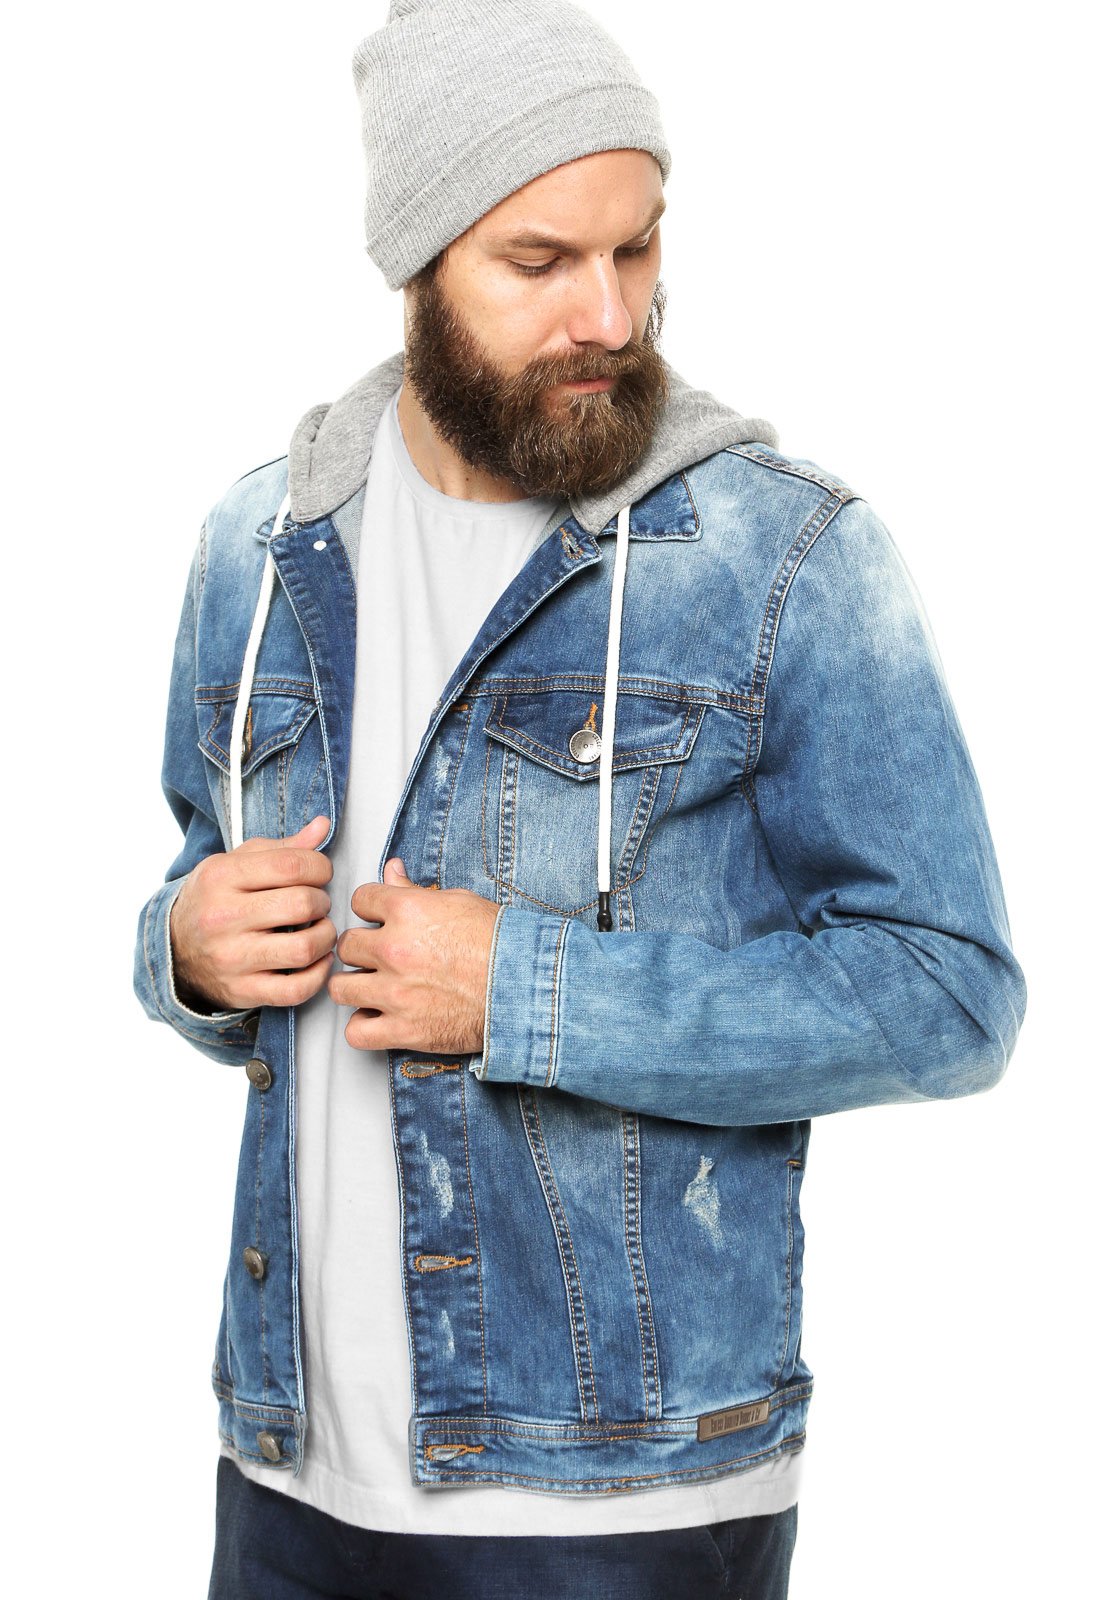 jaqueta jeans masculina dafiti